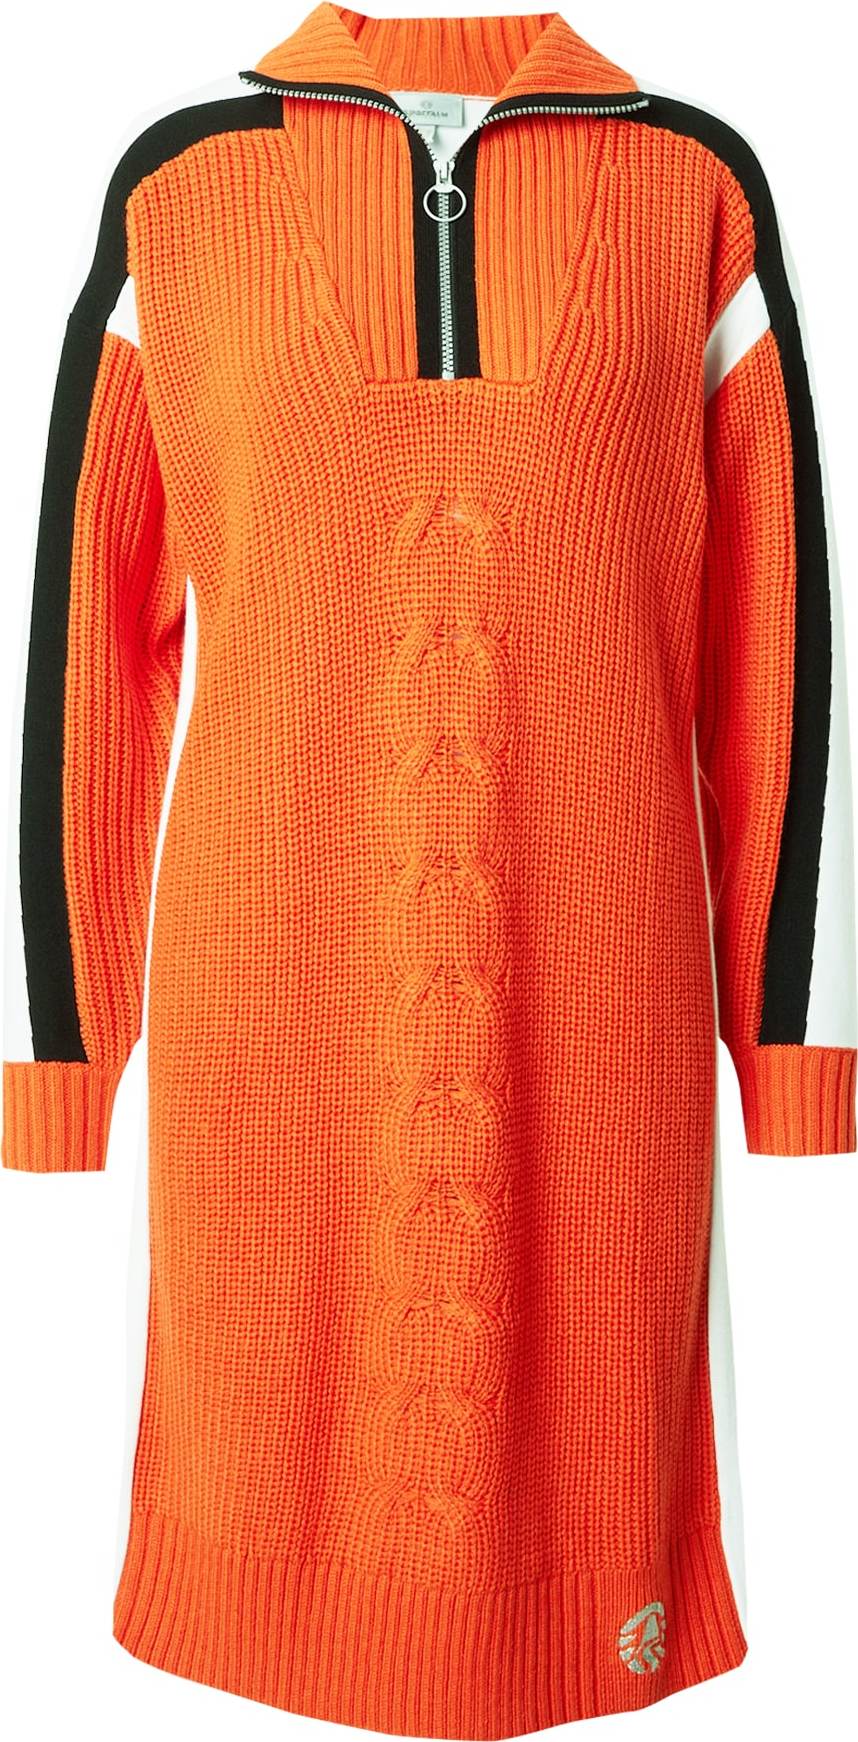 Úpletové šaty 'Rochester' Sportalm Kitzbühel oranžově červená / černá / bílá